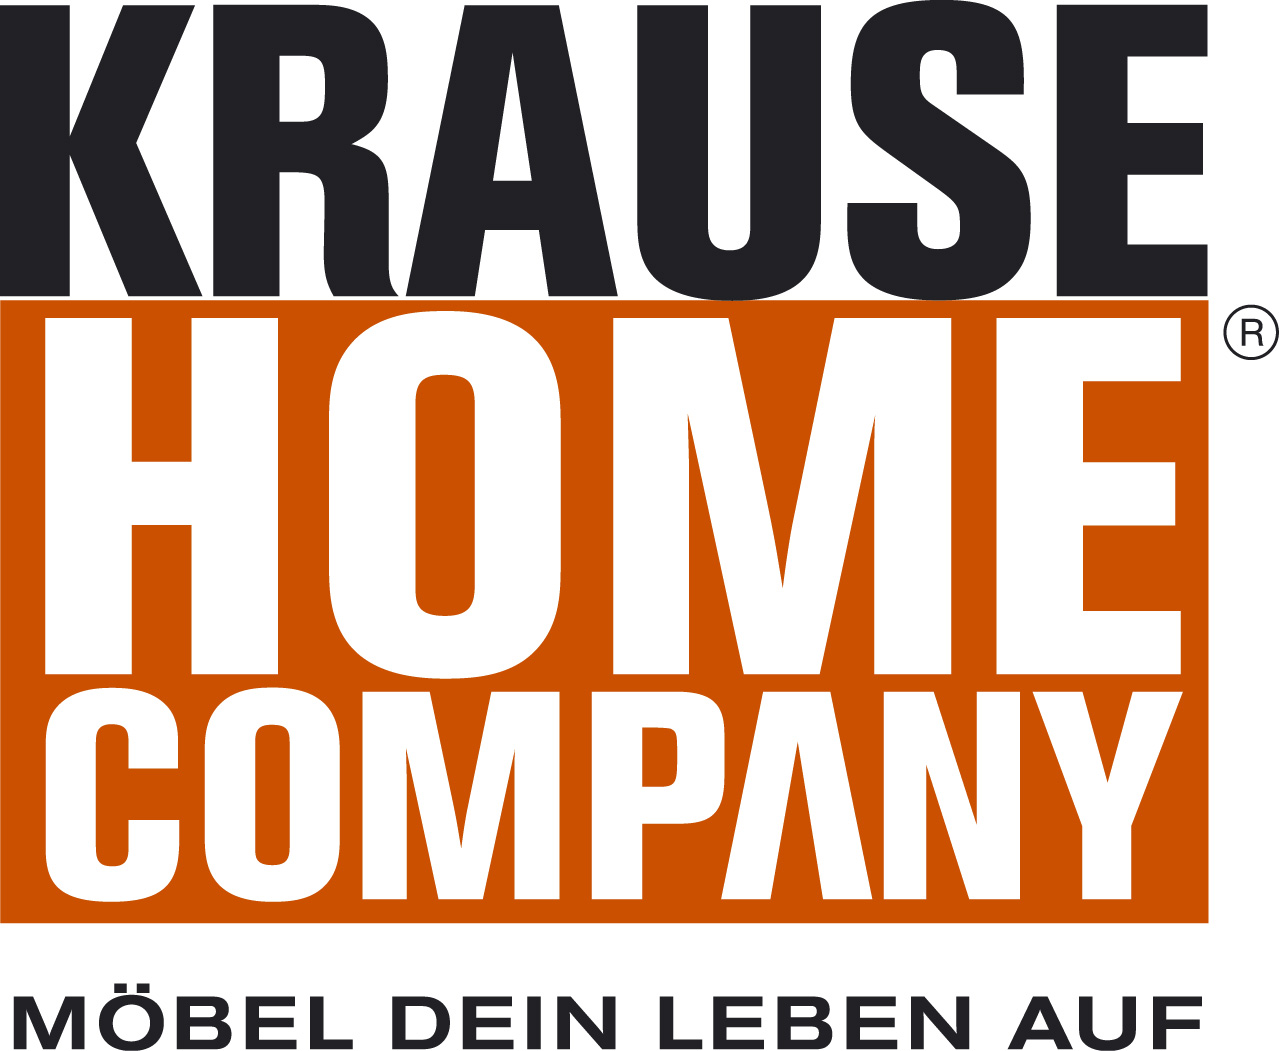 Krause Home Company